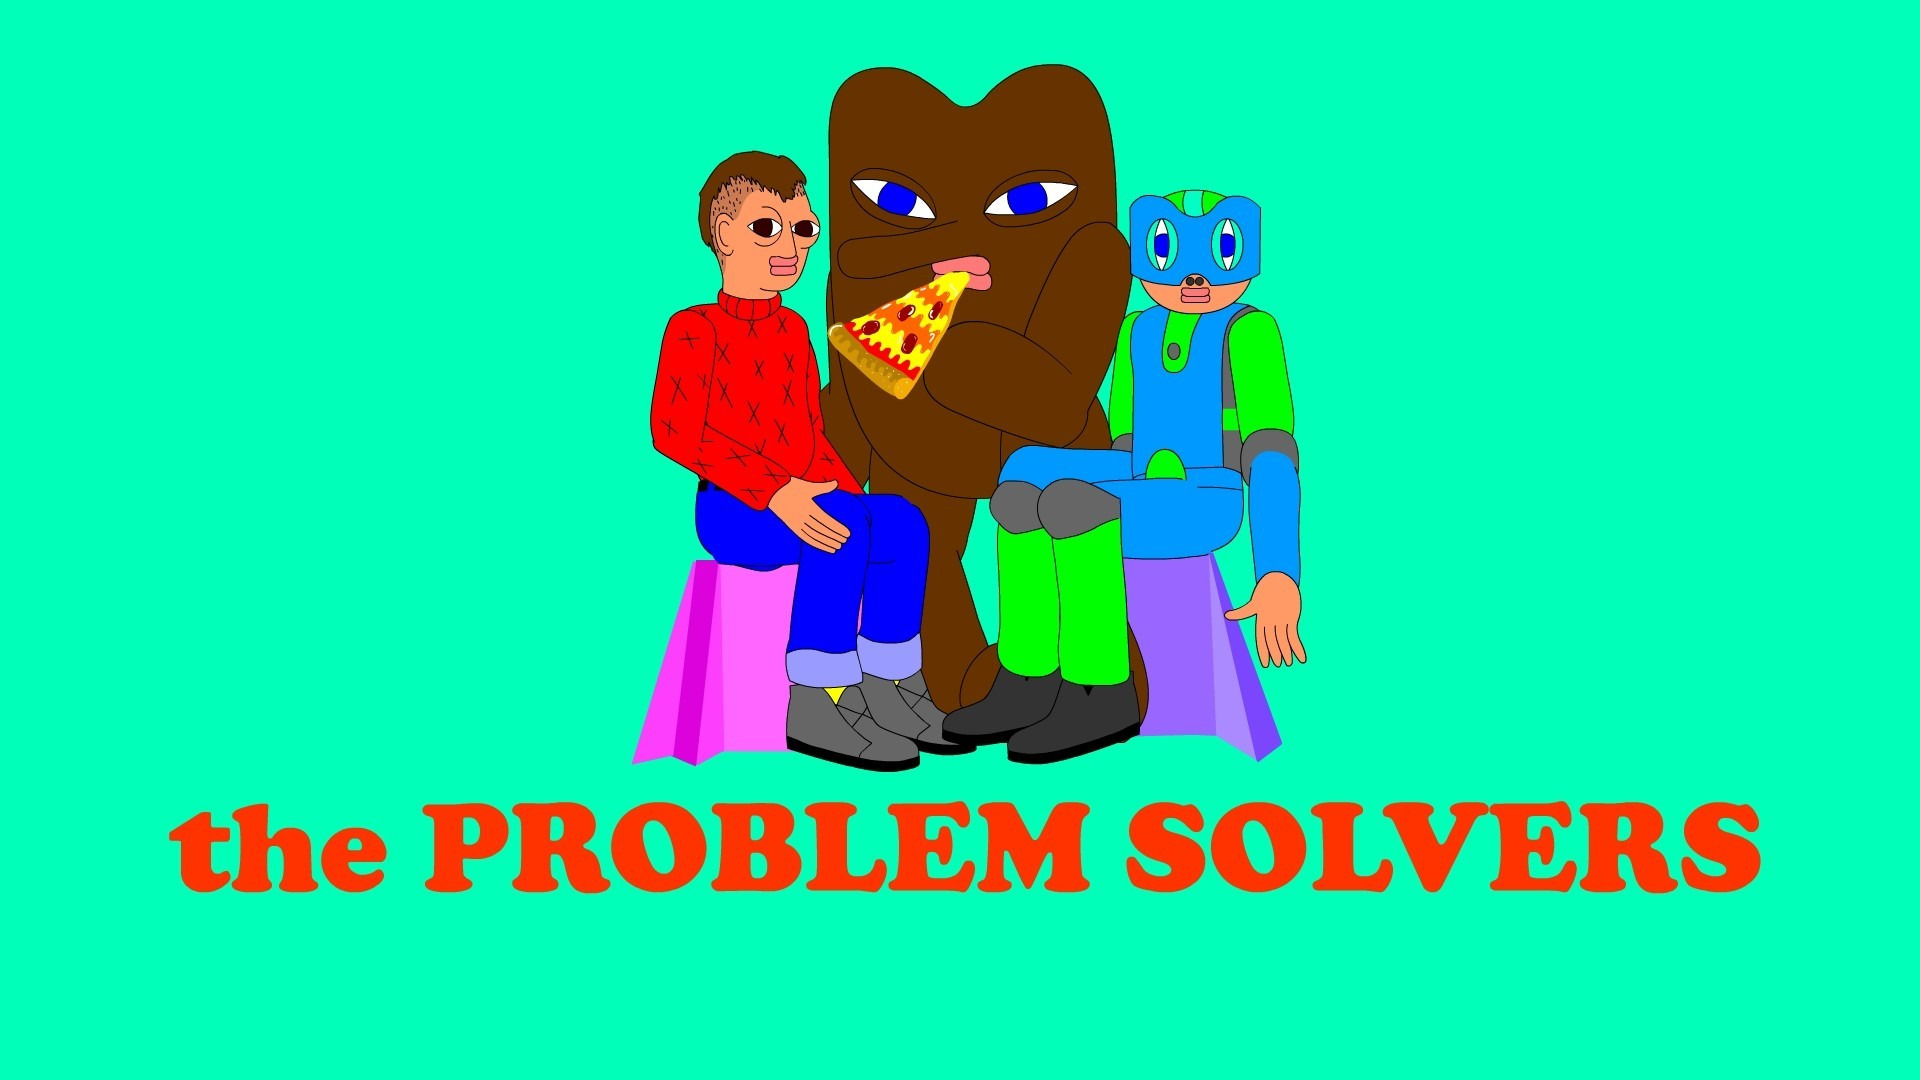 Show The Problem Solverz